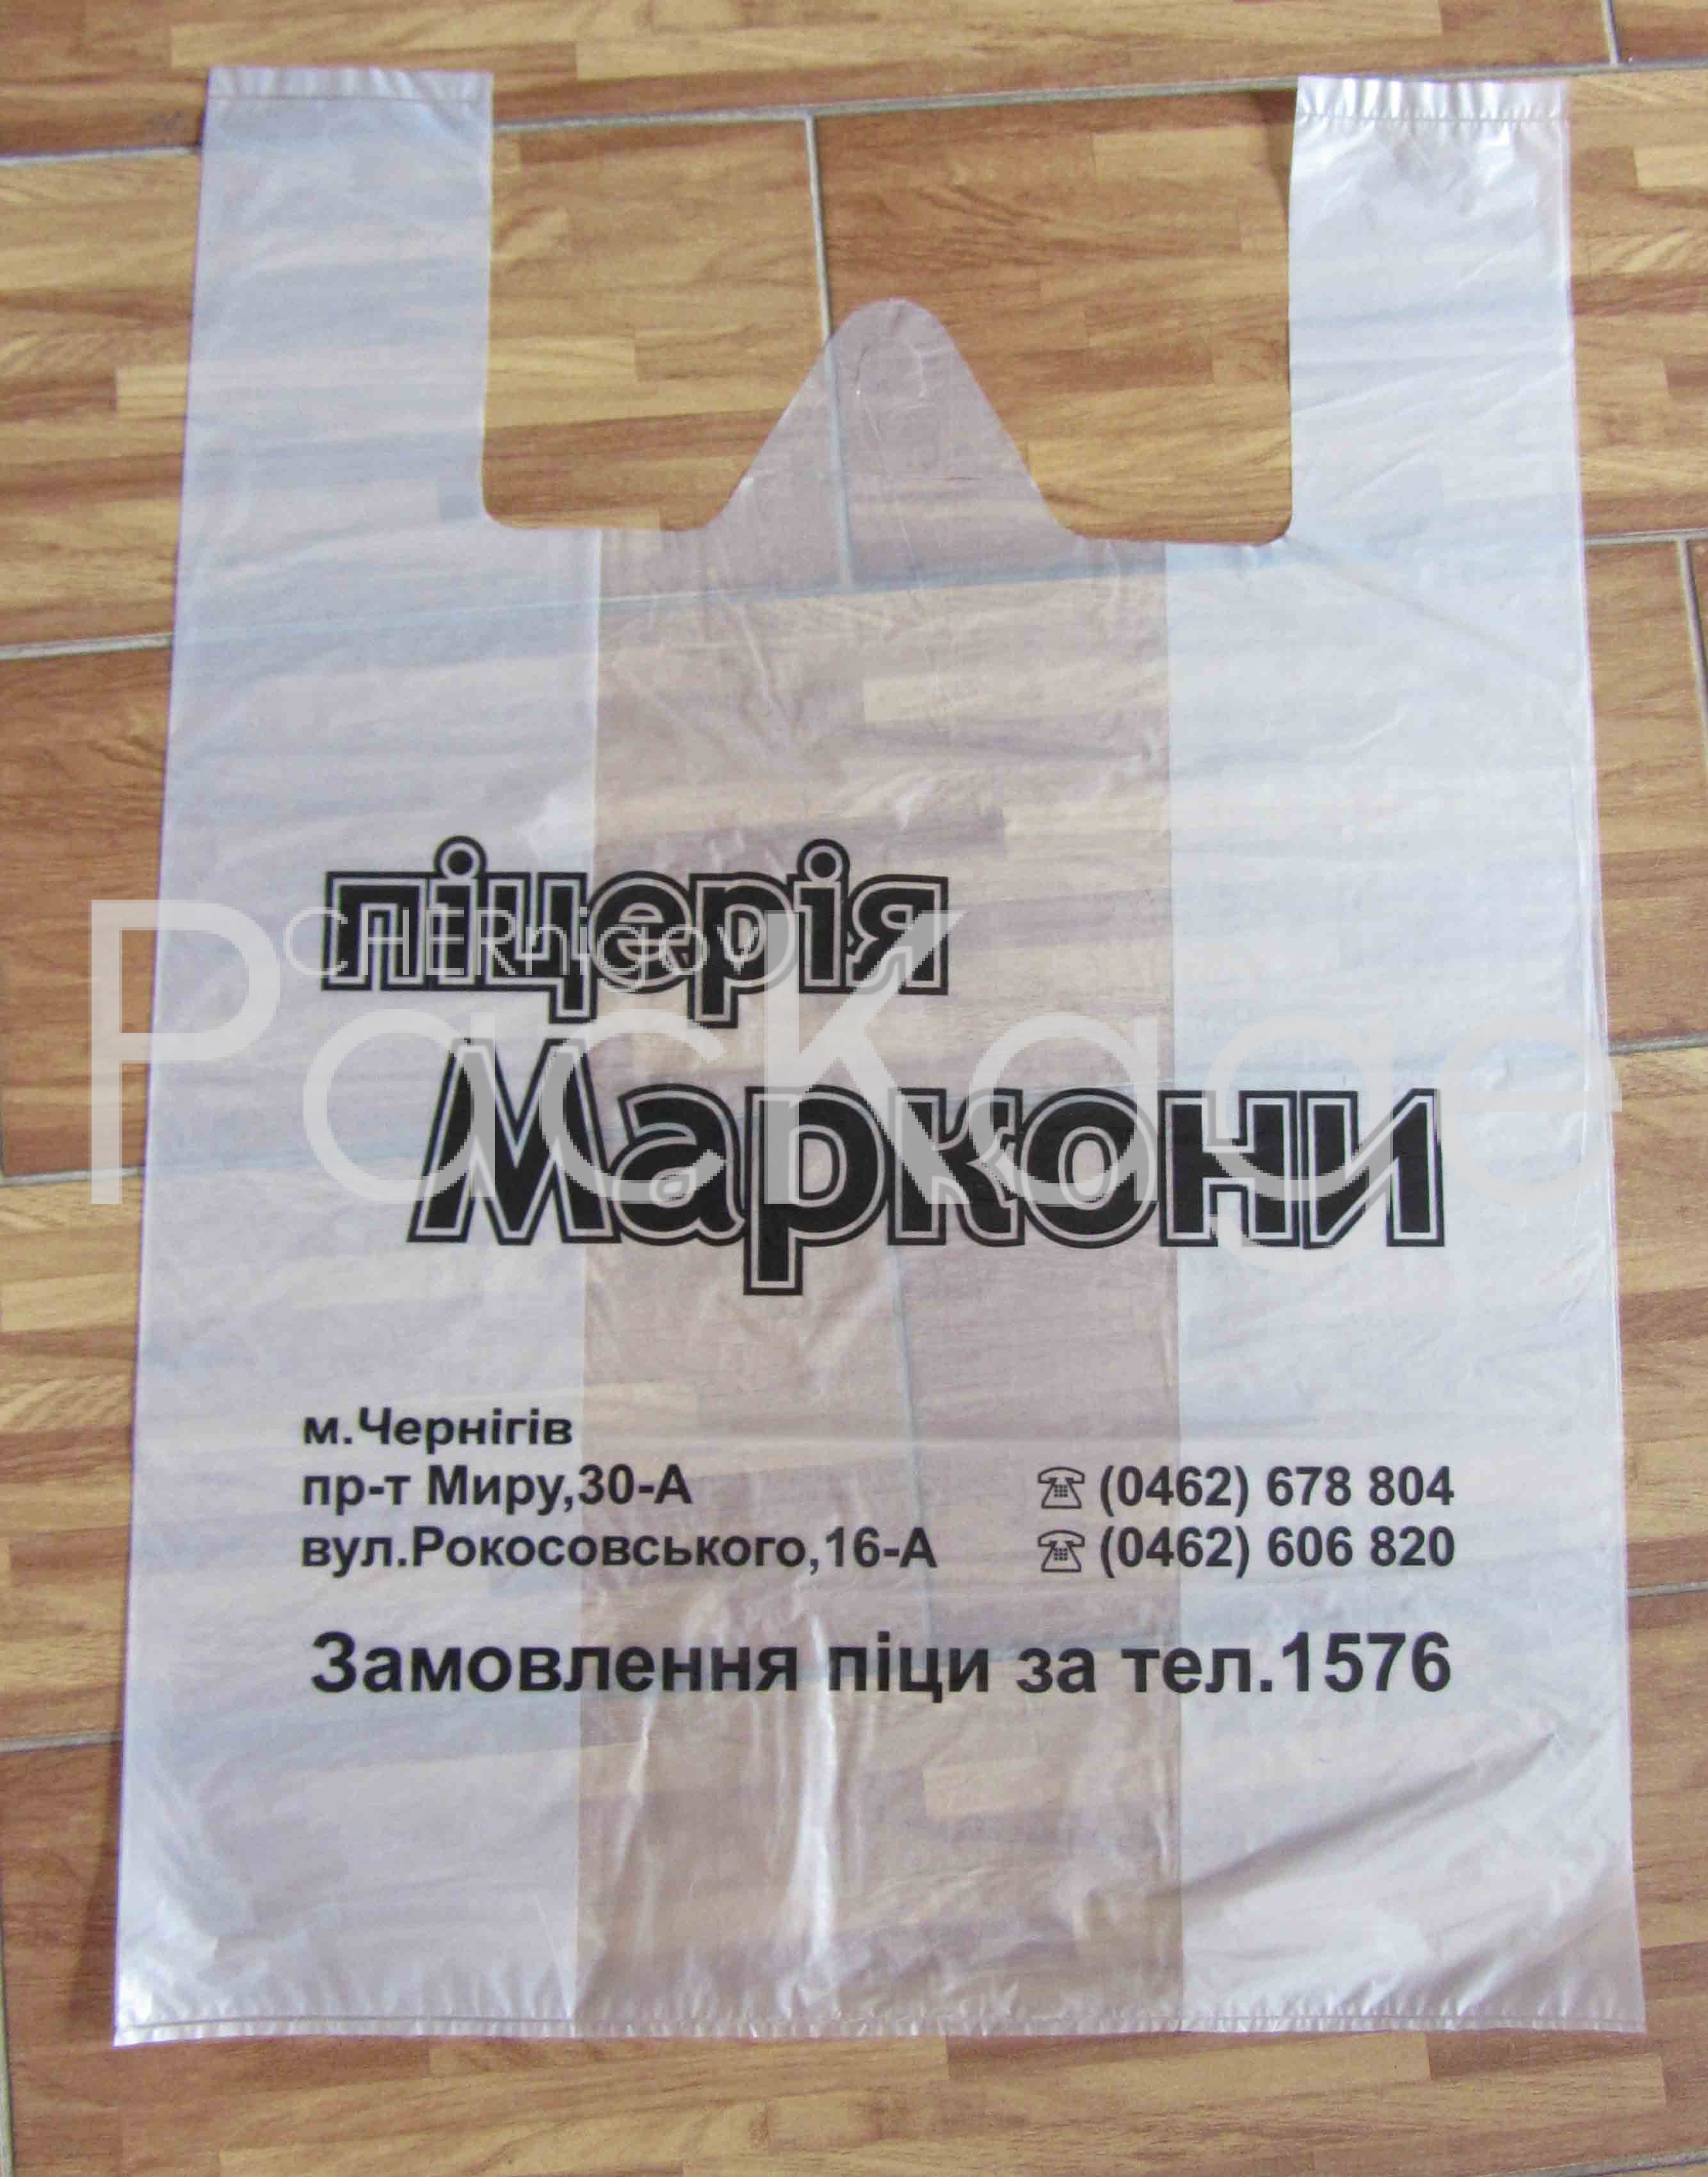 Изготовление упаковки на заказ Chernigov Package - Фото IMG_6488